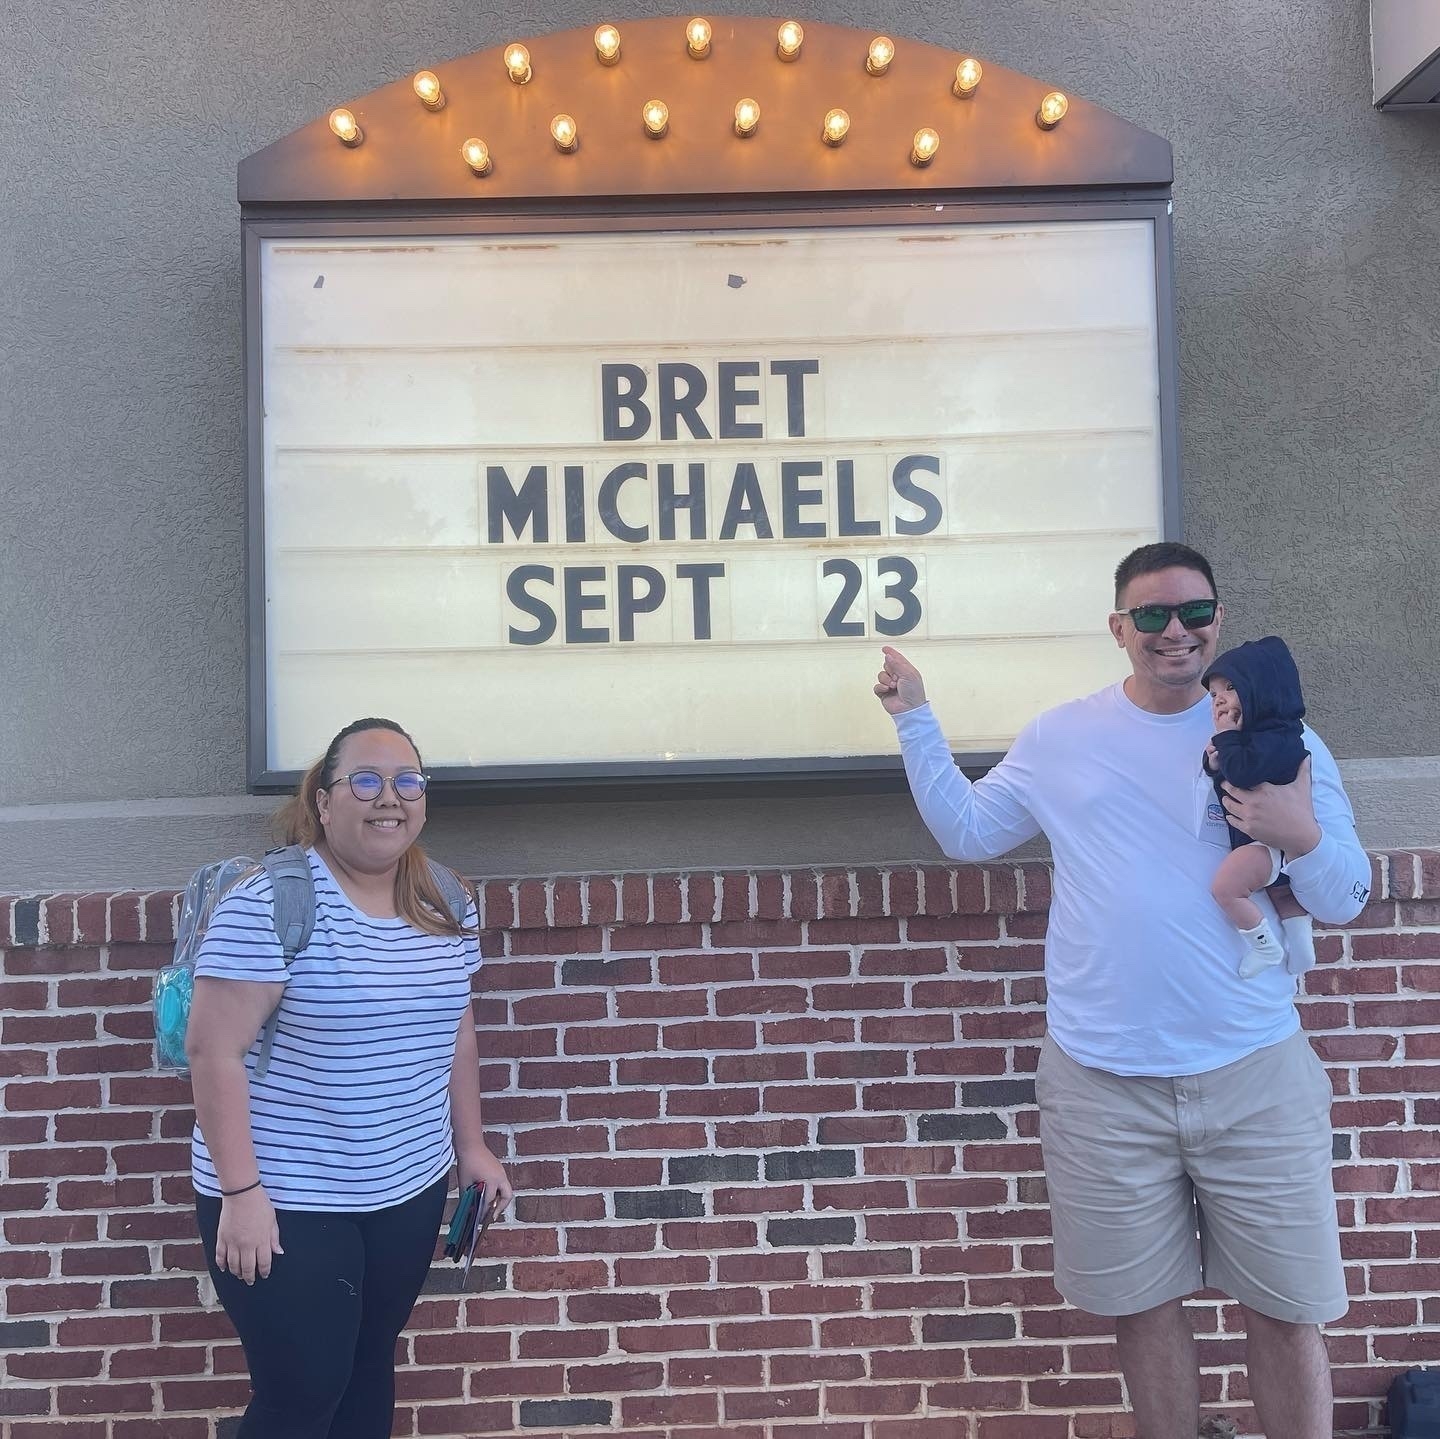 BRET MICHAELS NOTHIN BUT A GOOD TIME TOUR!